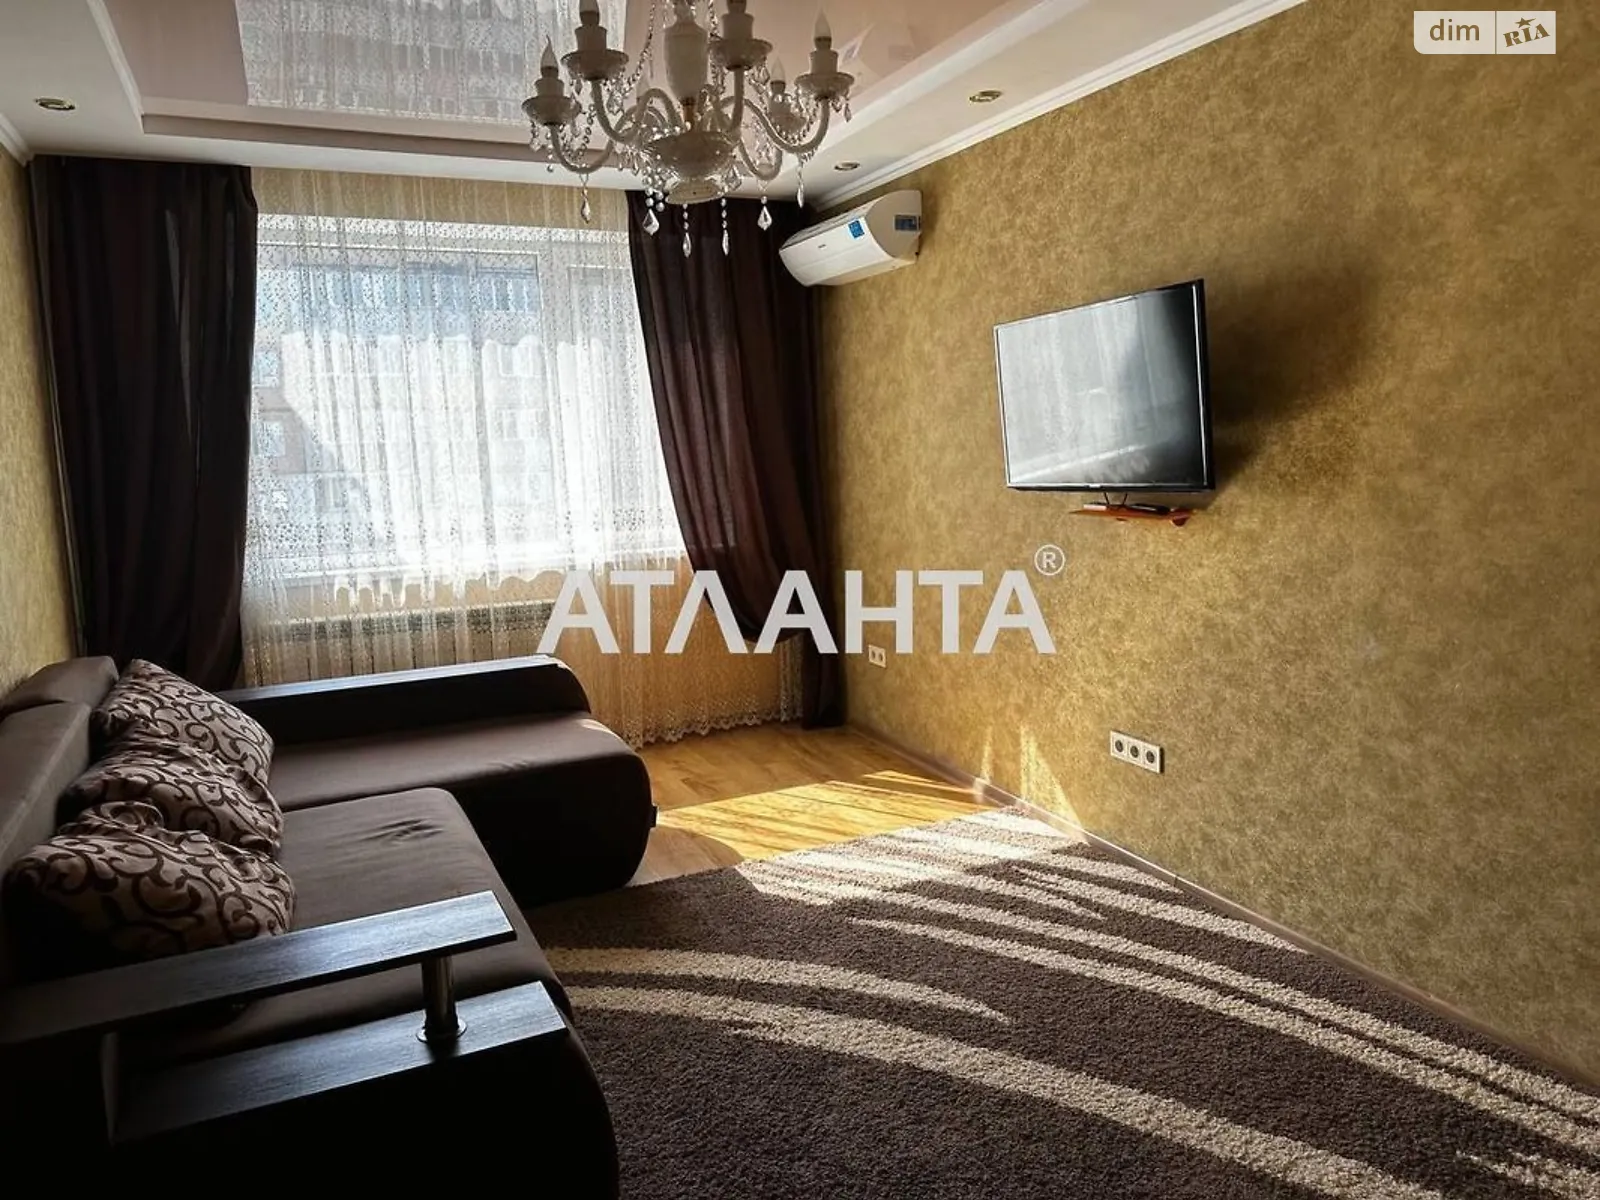 Продается 3-комнатная квартира 73.5 кв. м в Одессе, ул. Академика Сахарова - фото 1